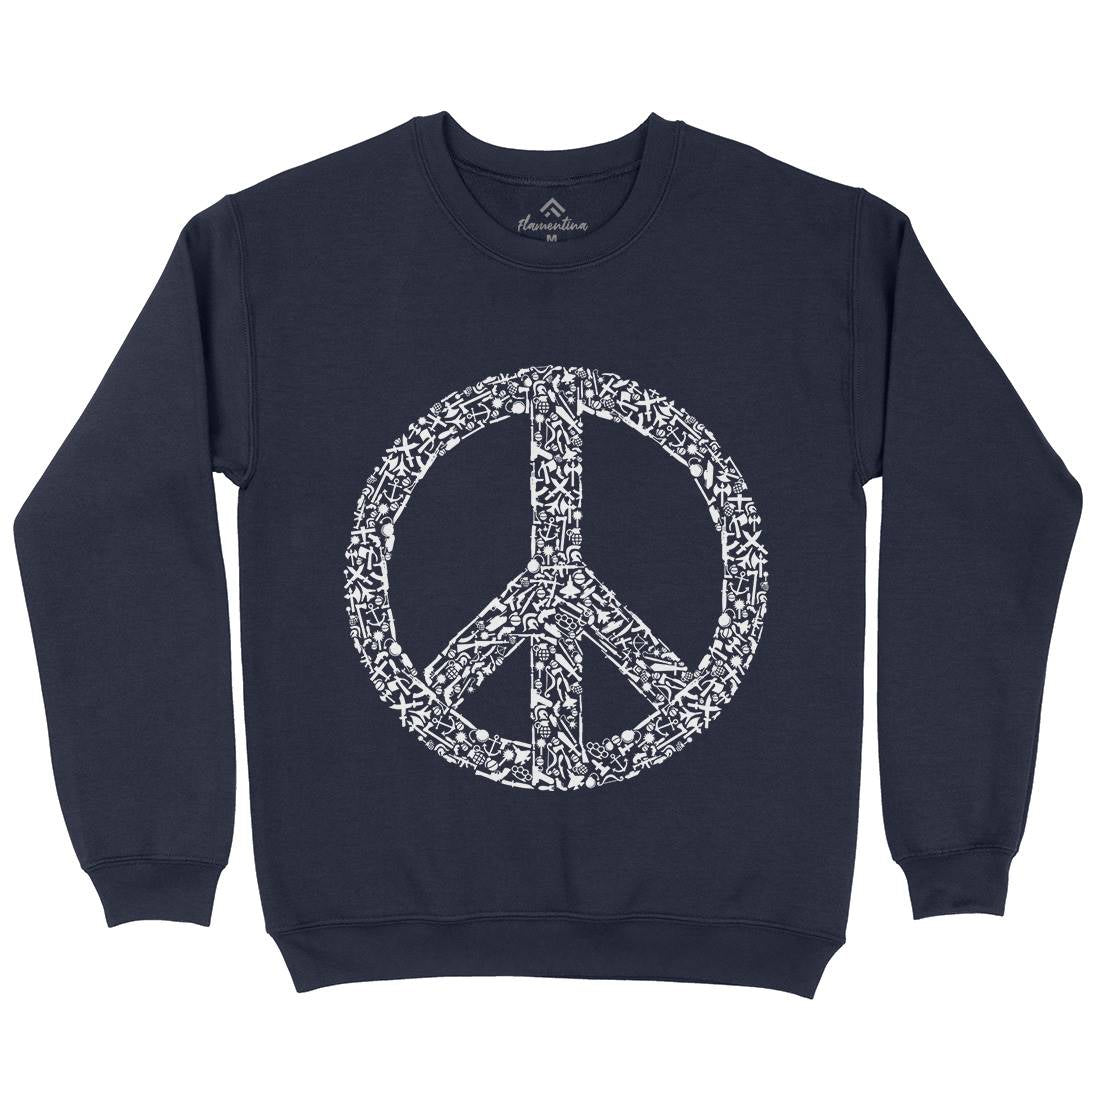 War Kids Crew Neck Sweatshirt Peace B093